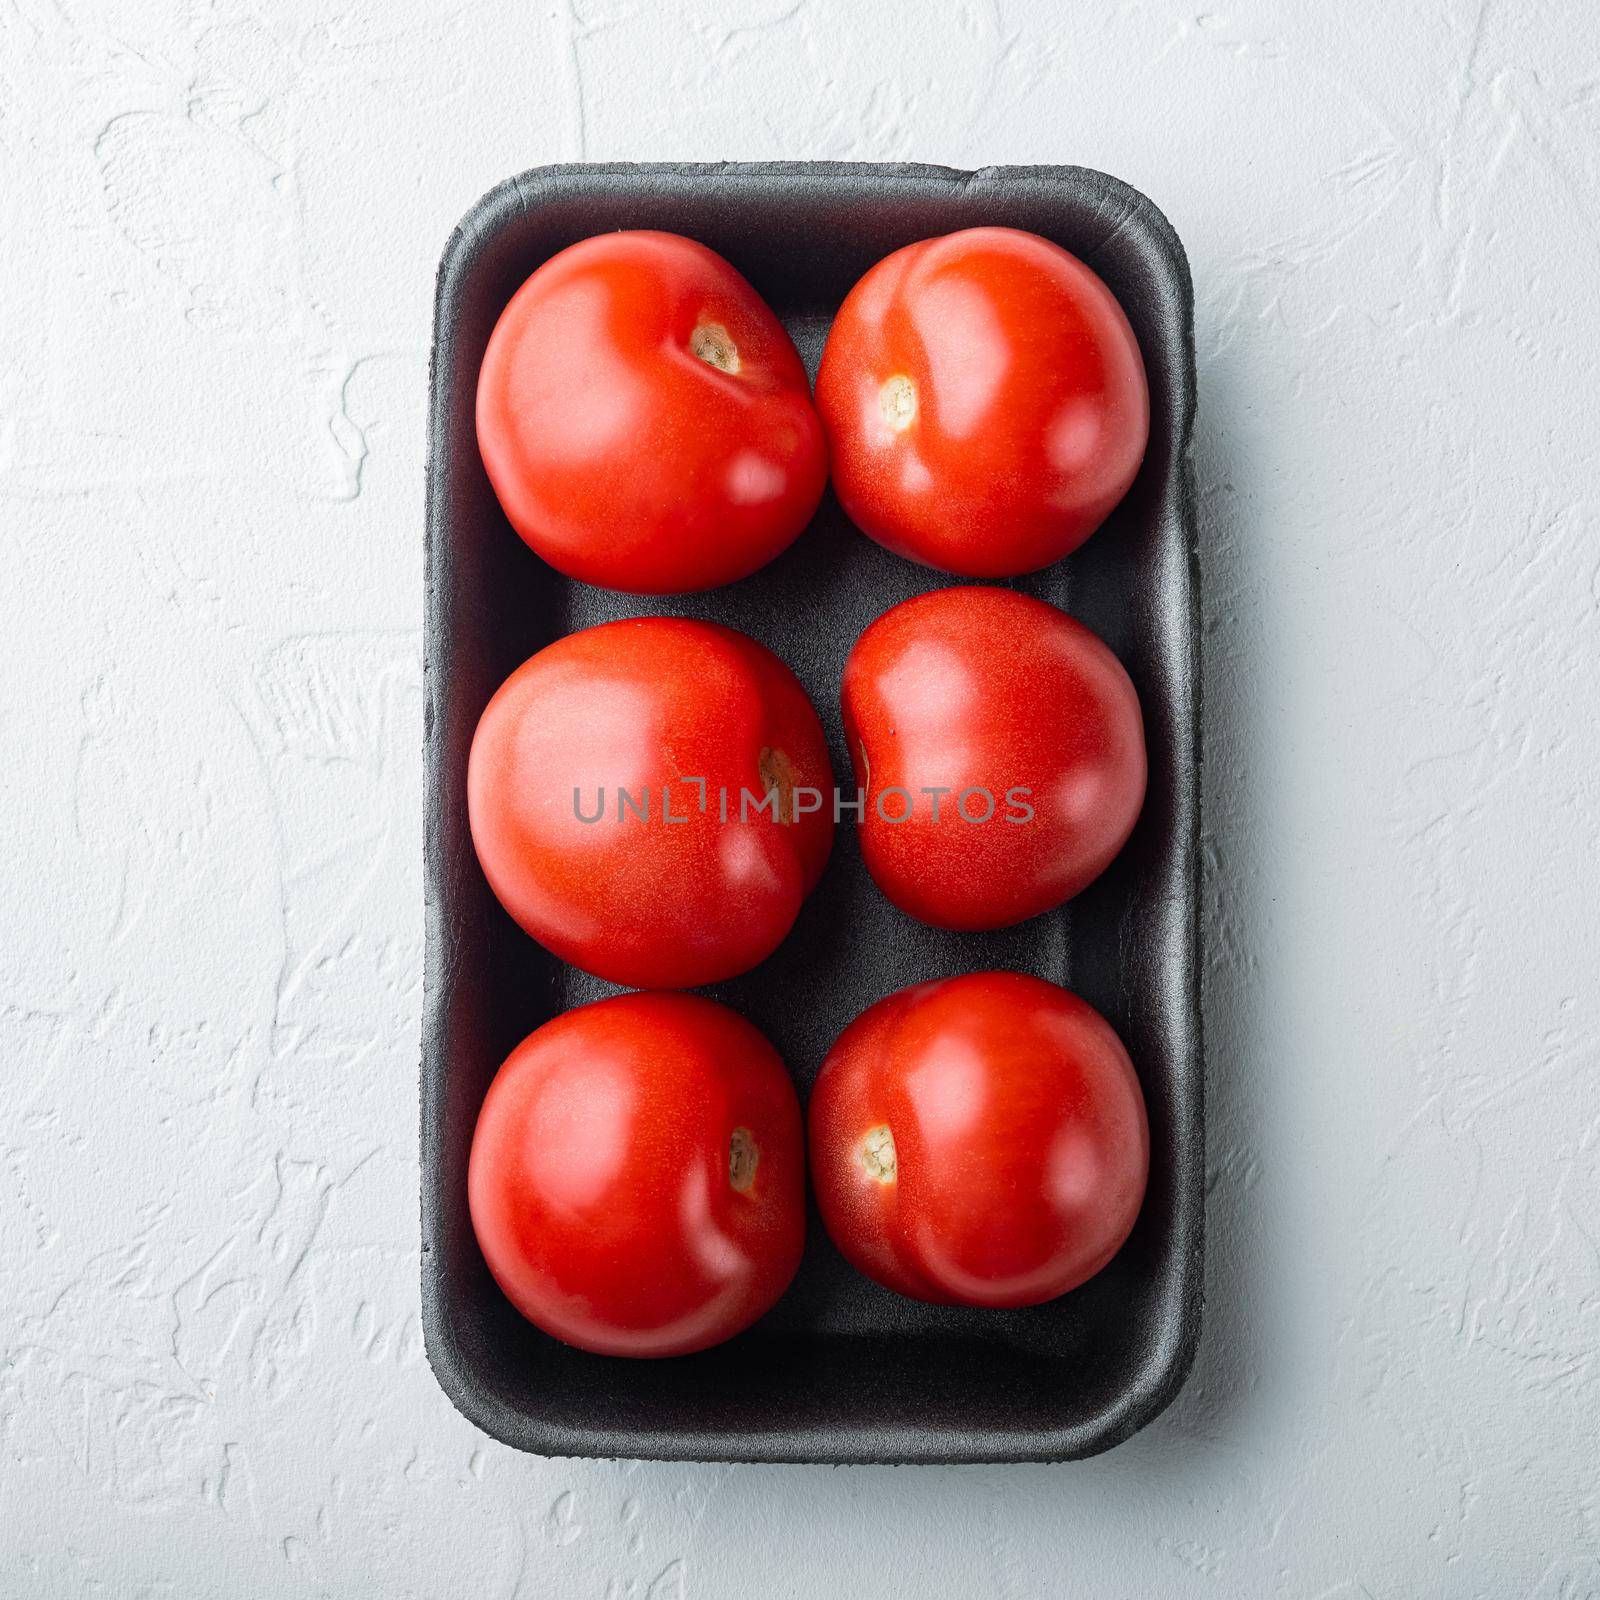 Red tomatoe, on white background by Ilianesolenyi